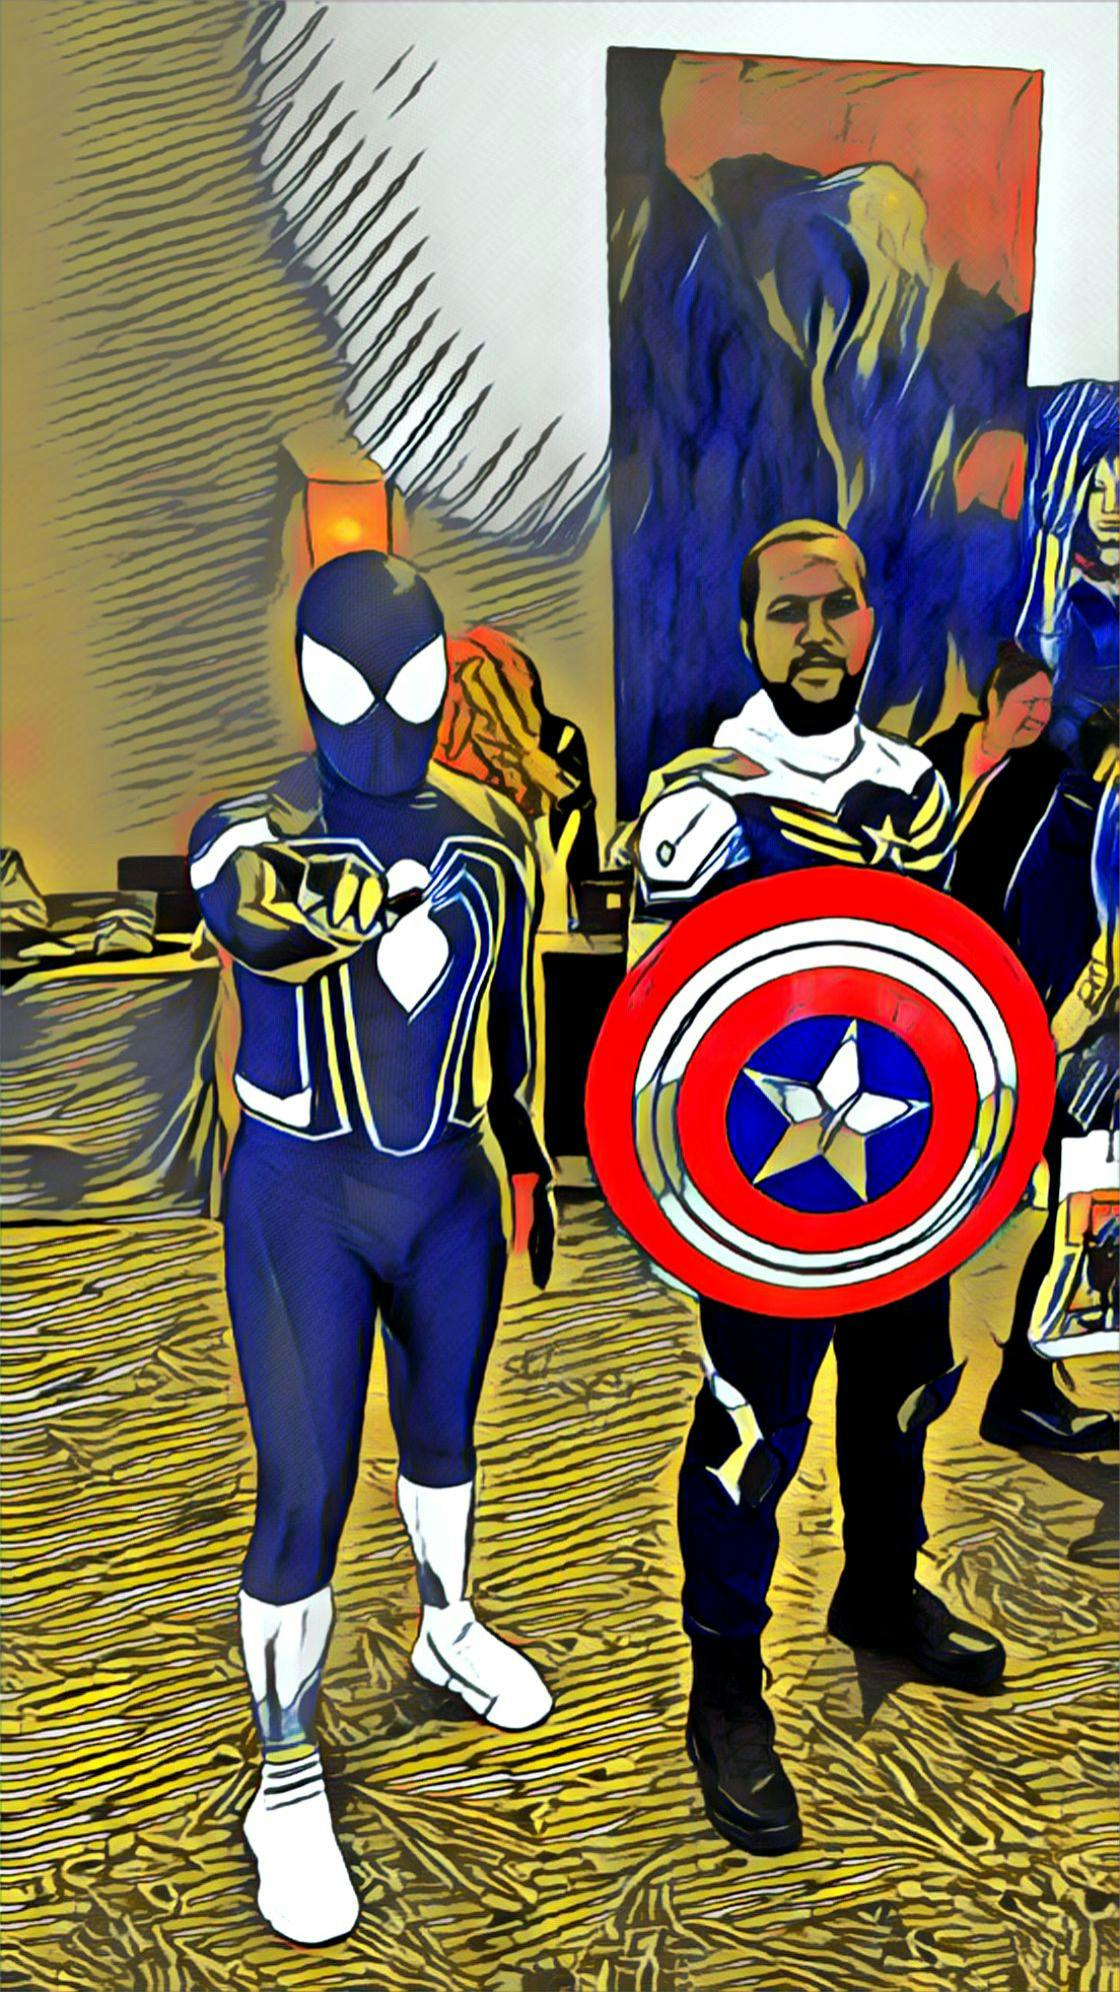 Captain America cosplay at Wicked Comic Con Boston